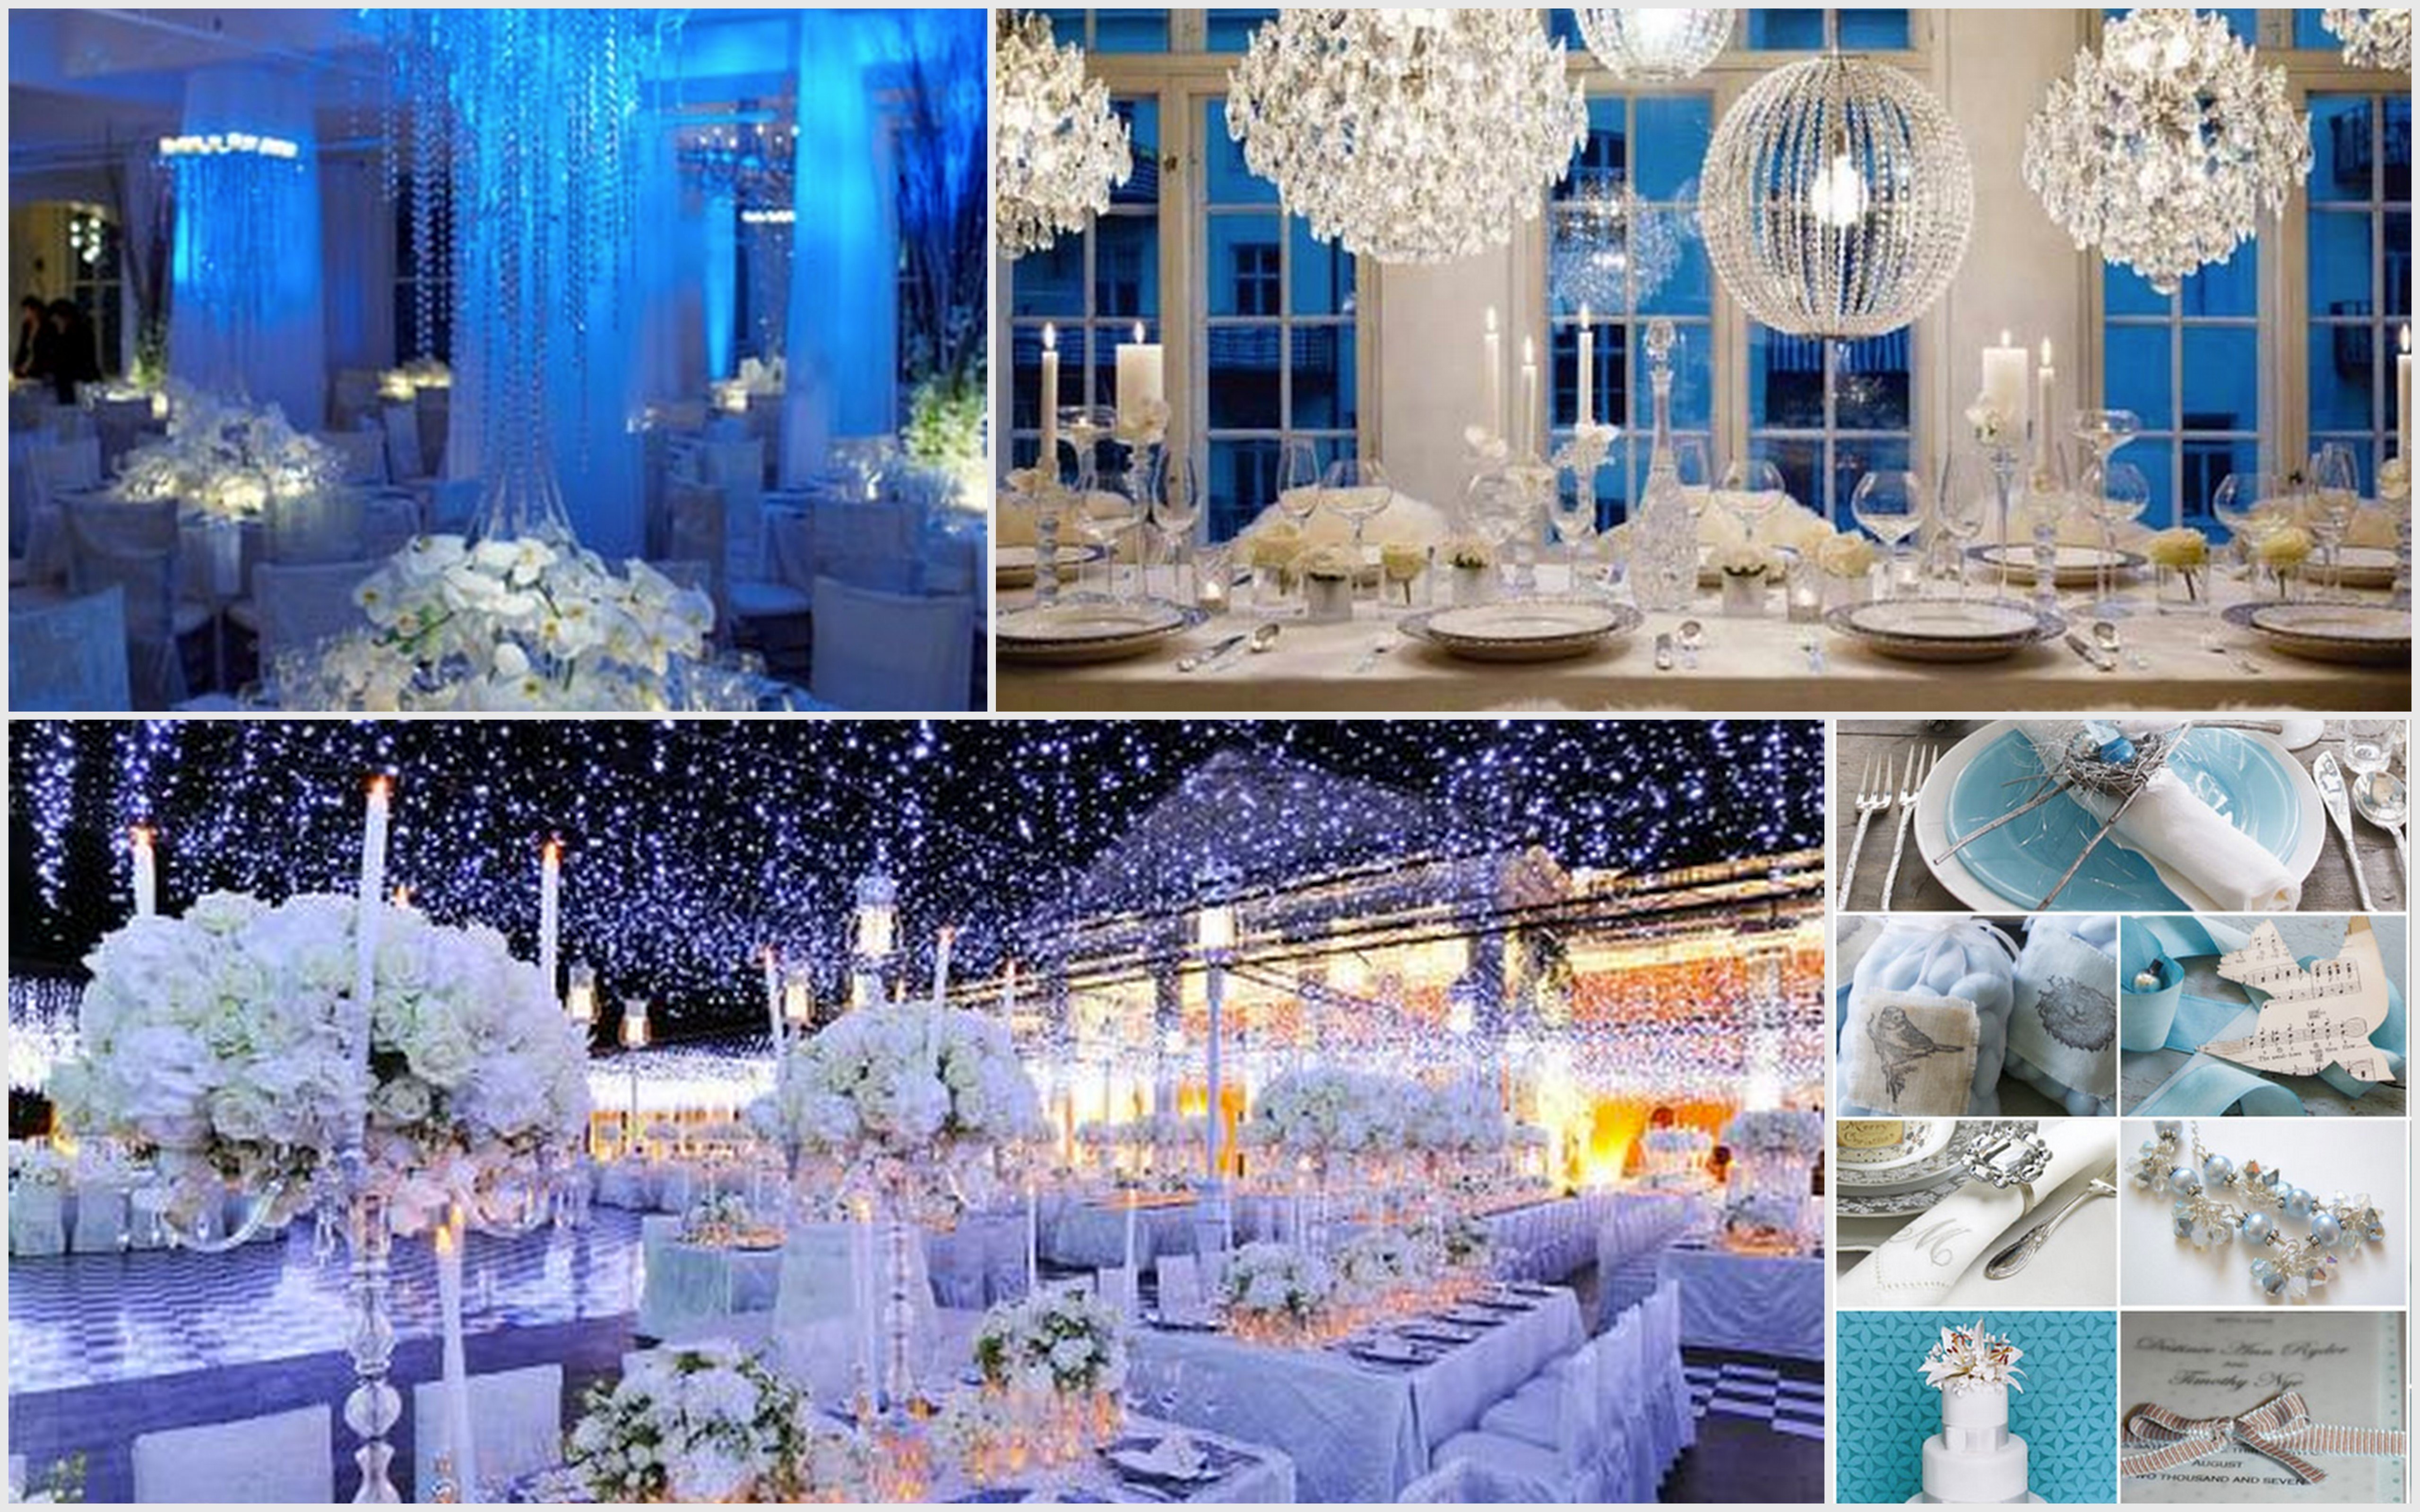  official_topwedding_blog_winter_wedding_reception_decoration_ideas